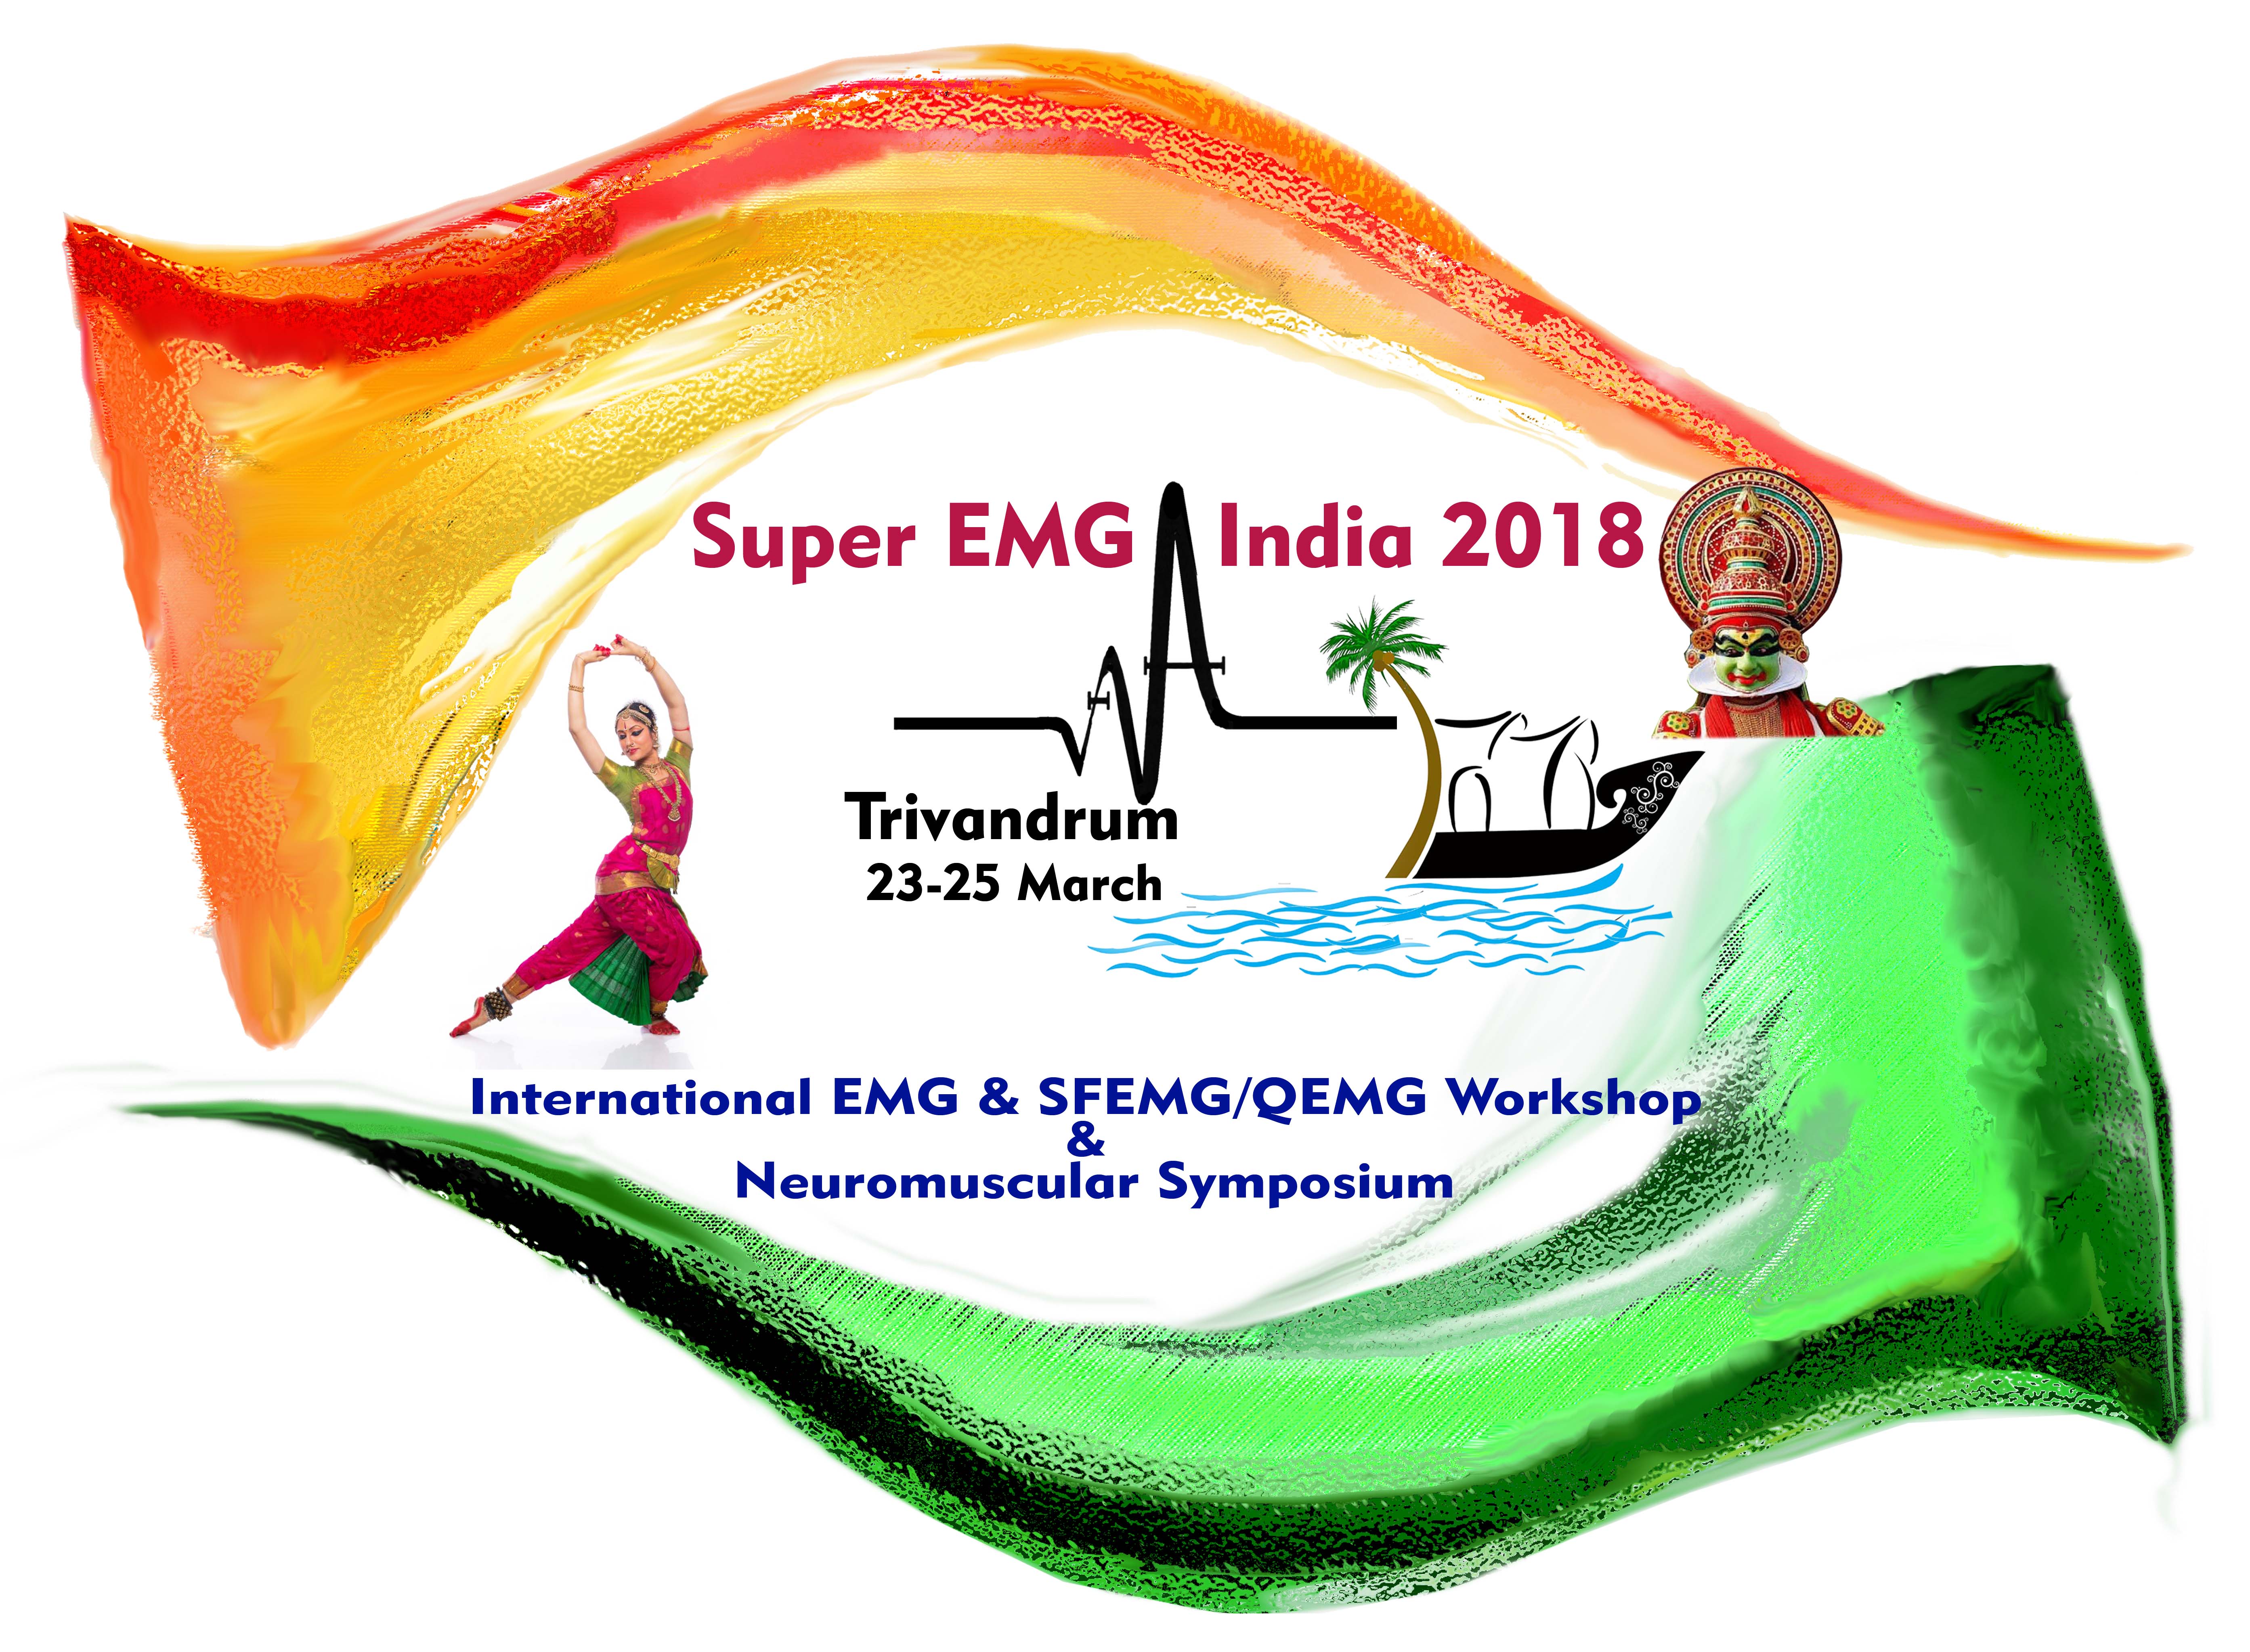 Super EMG India 2018